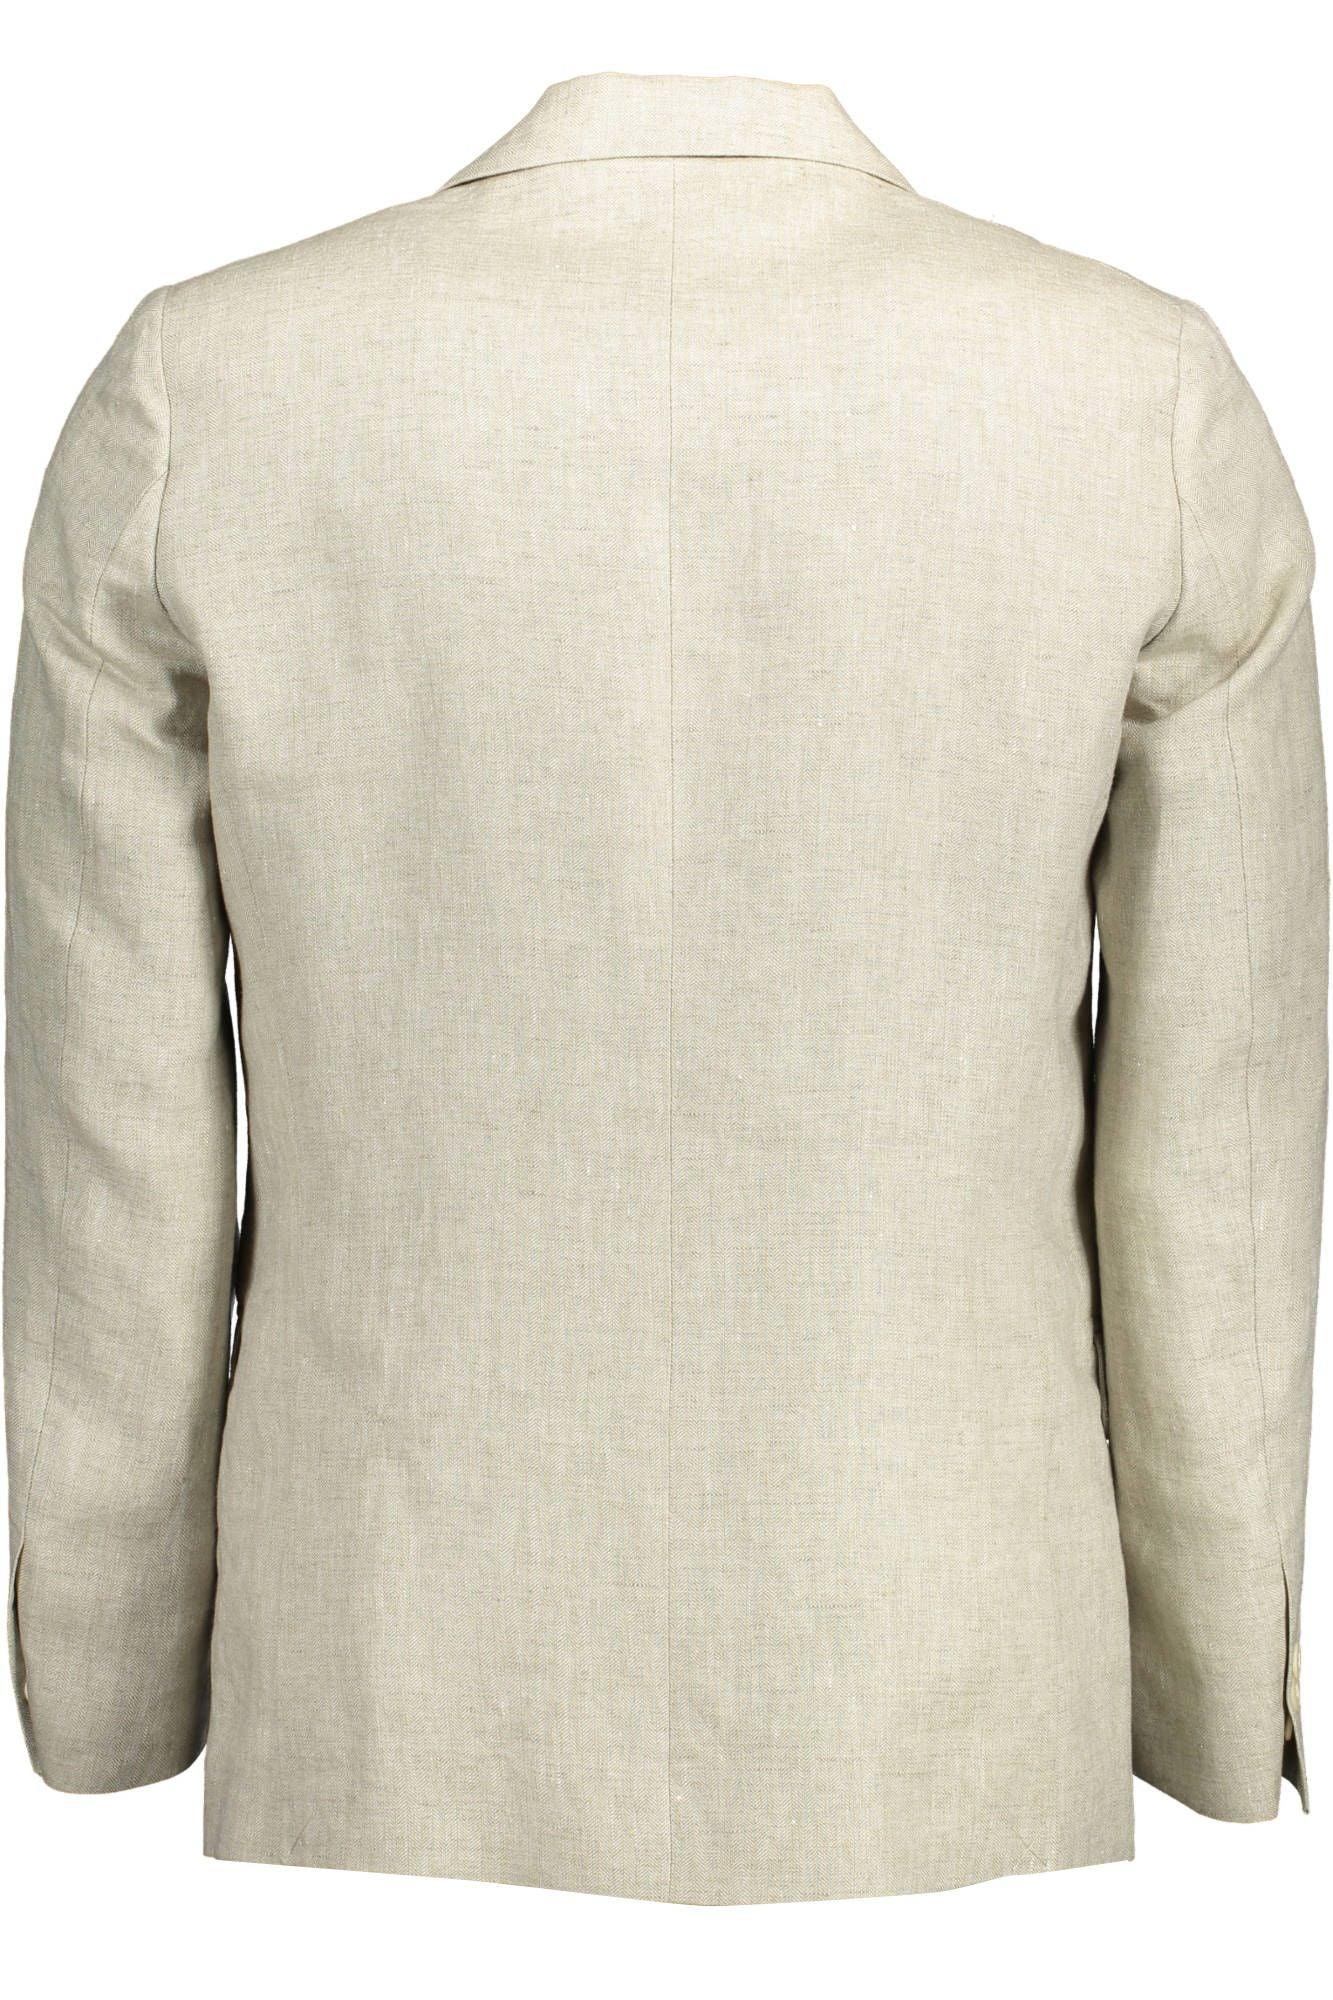 Gant Beige Linen Classic Jacket with Logo - PER.FASHION